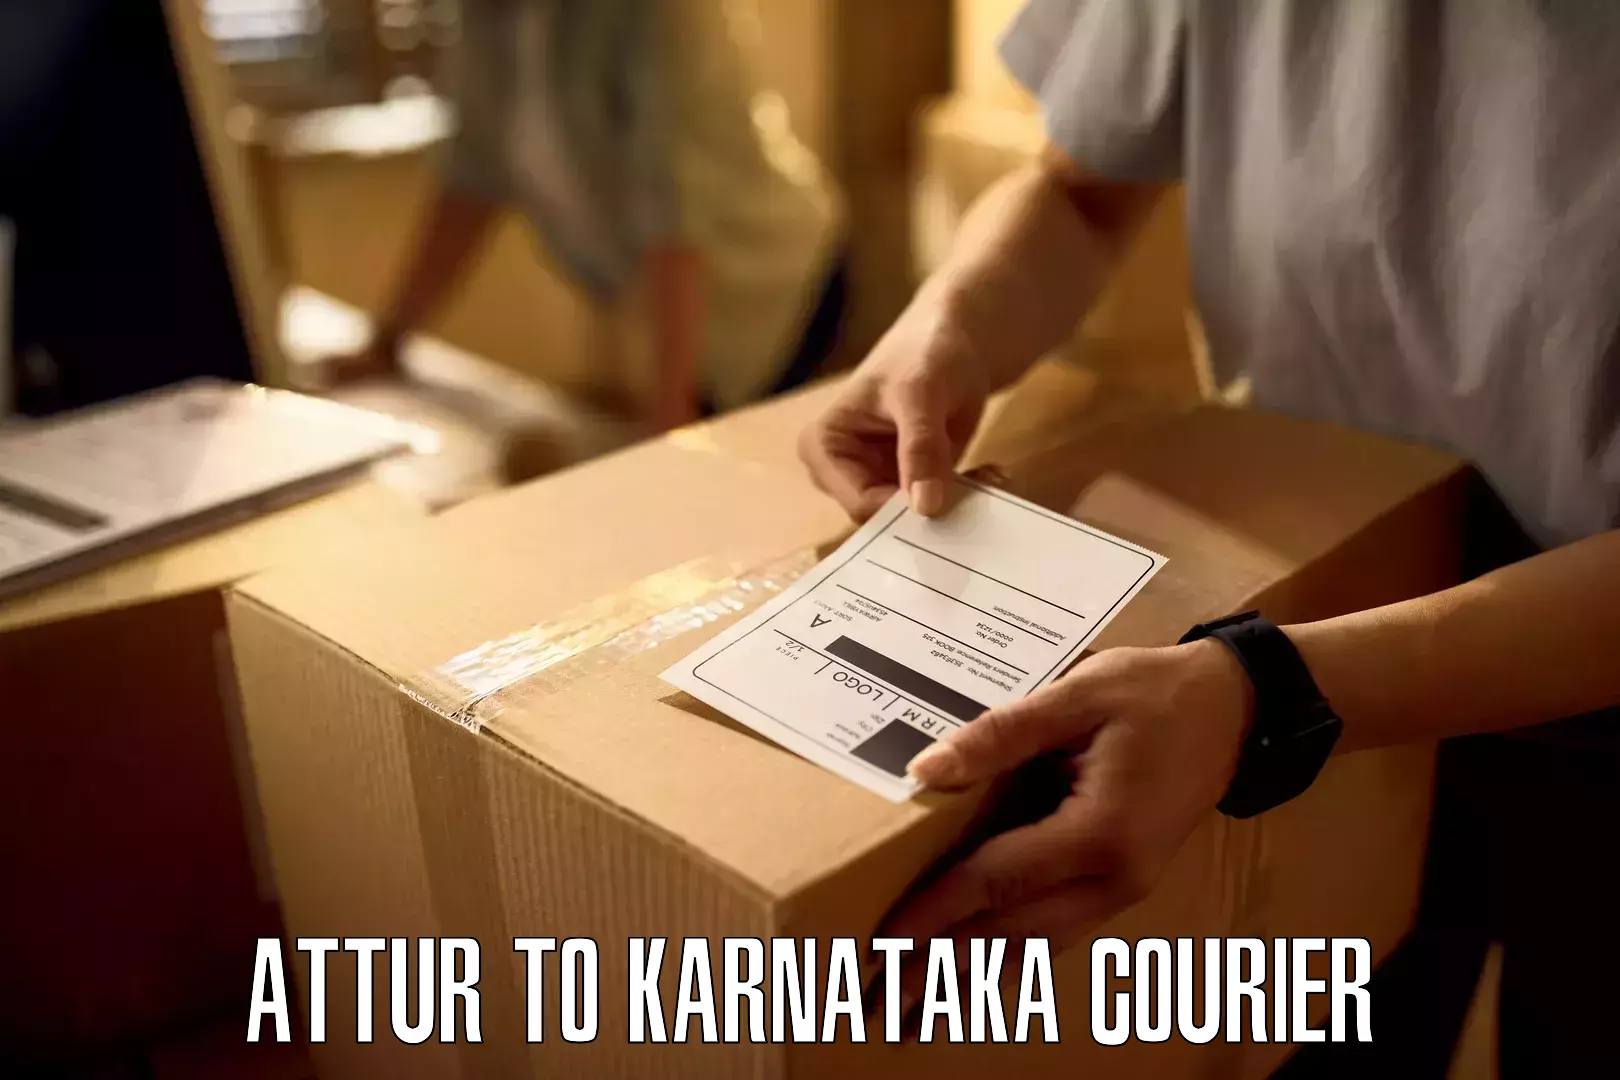 Courier service partnerships Attur to Karnataka